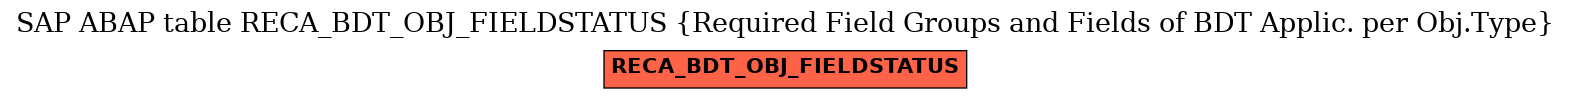 E-R Diagram for table RECA_BDT_OBJ_FIELDSTATUS (Required Field Groups and Fields of BDT Applic. per Obj.Type)